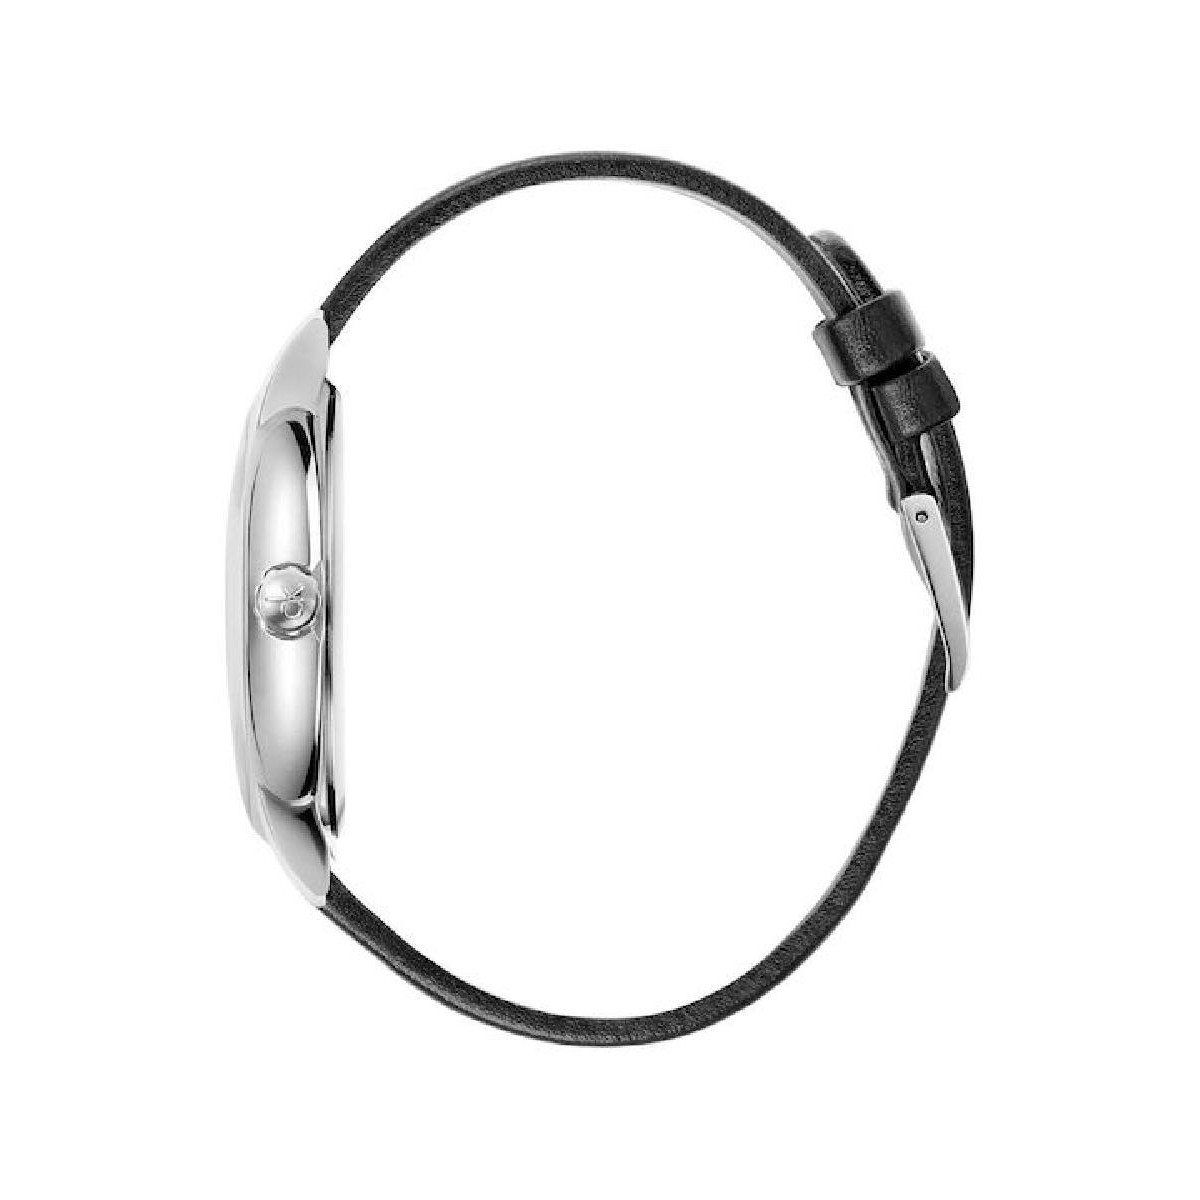 Calvin Klein Estabilshed K9H2X1C6 Ανδρικό Ρολόι black